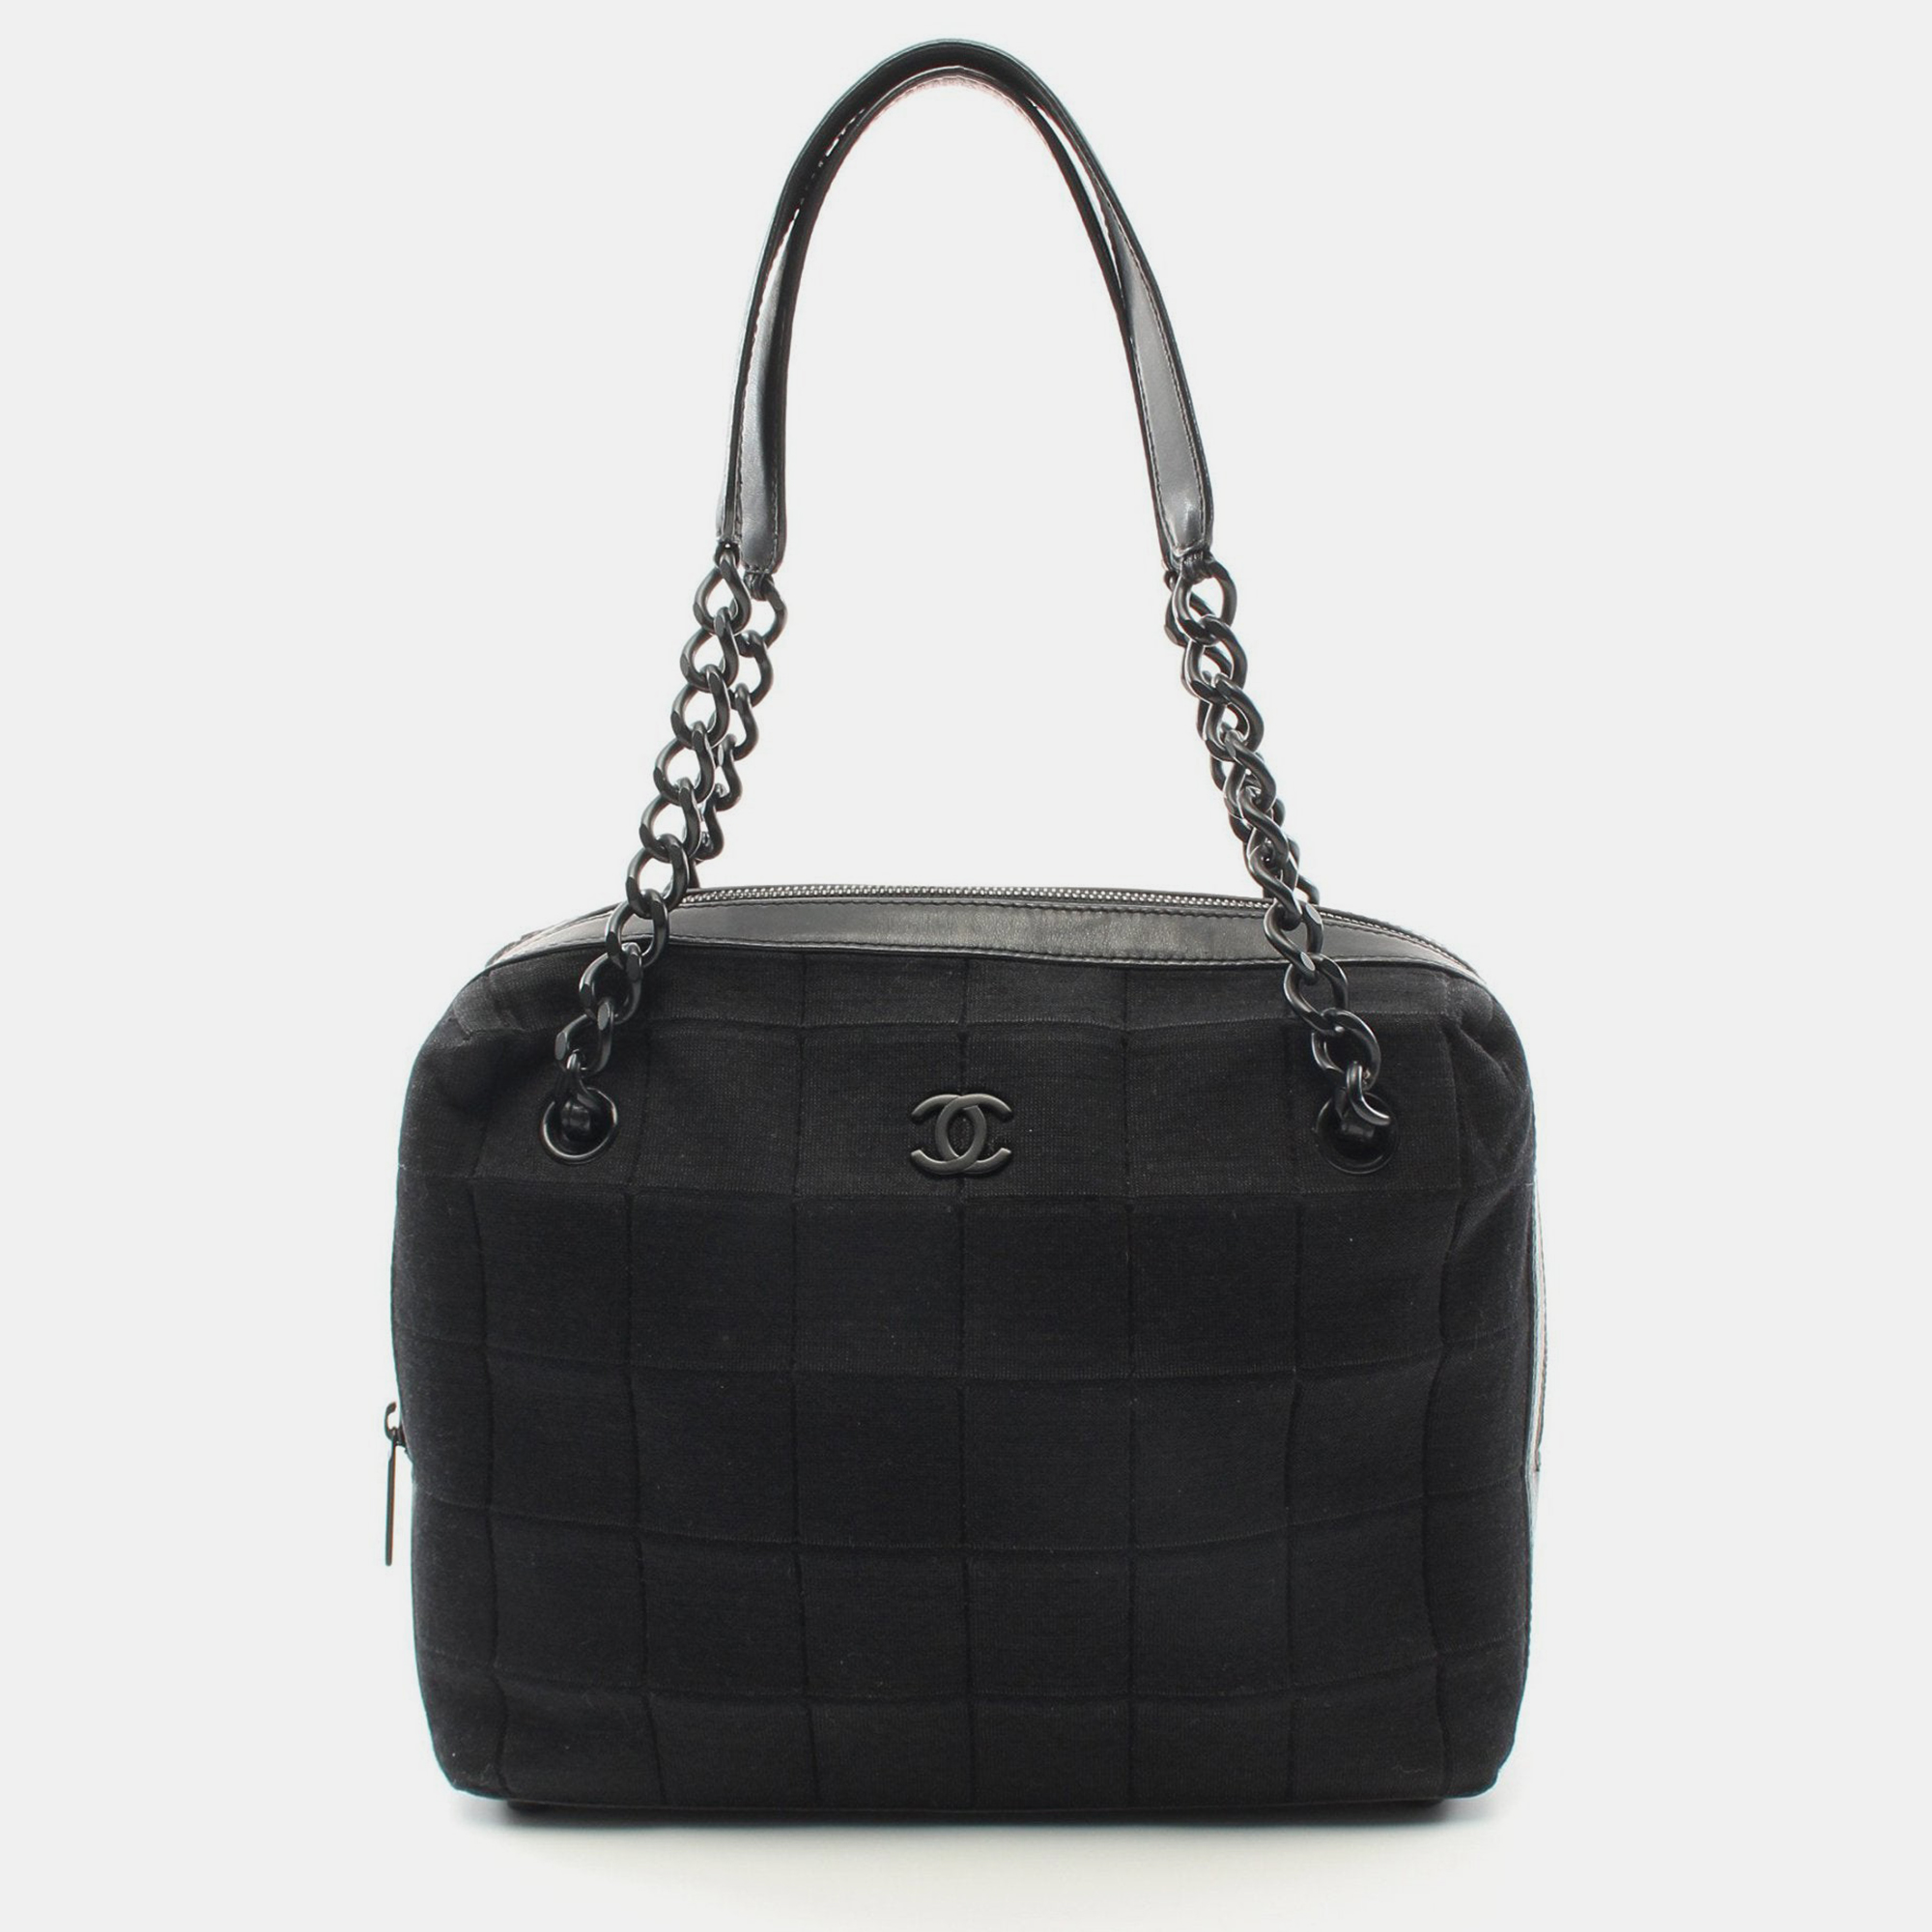 Chanel chocolate bar chain shoulder bag cotton jersey leather black black hardware